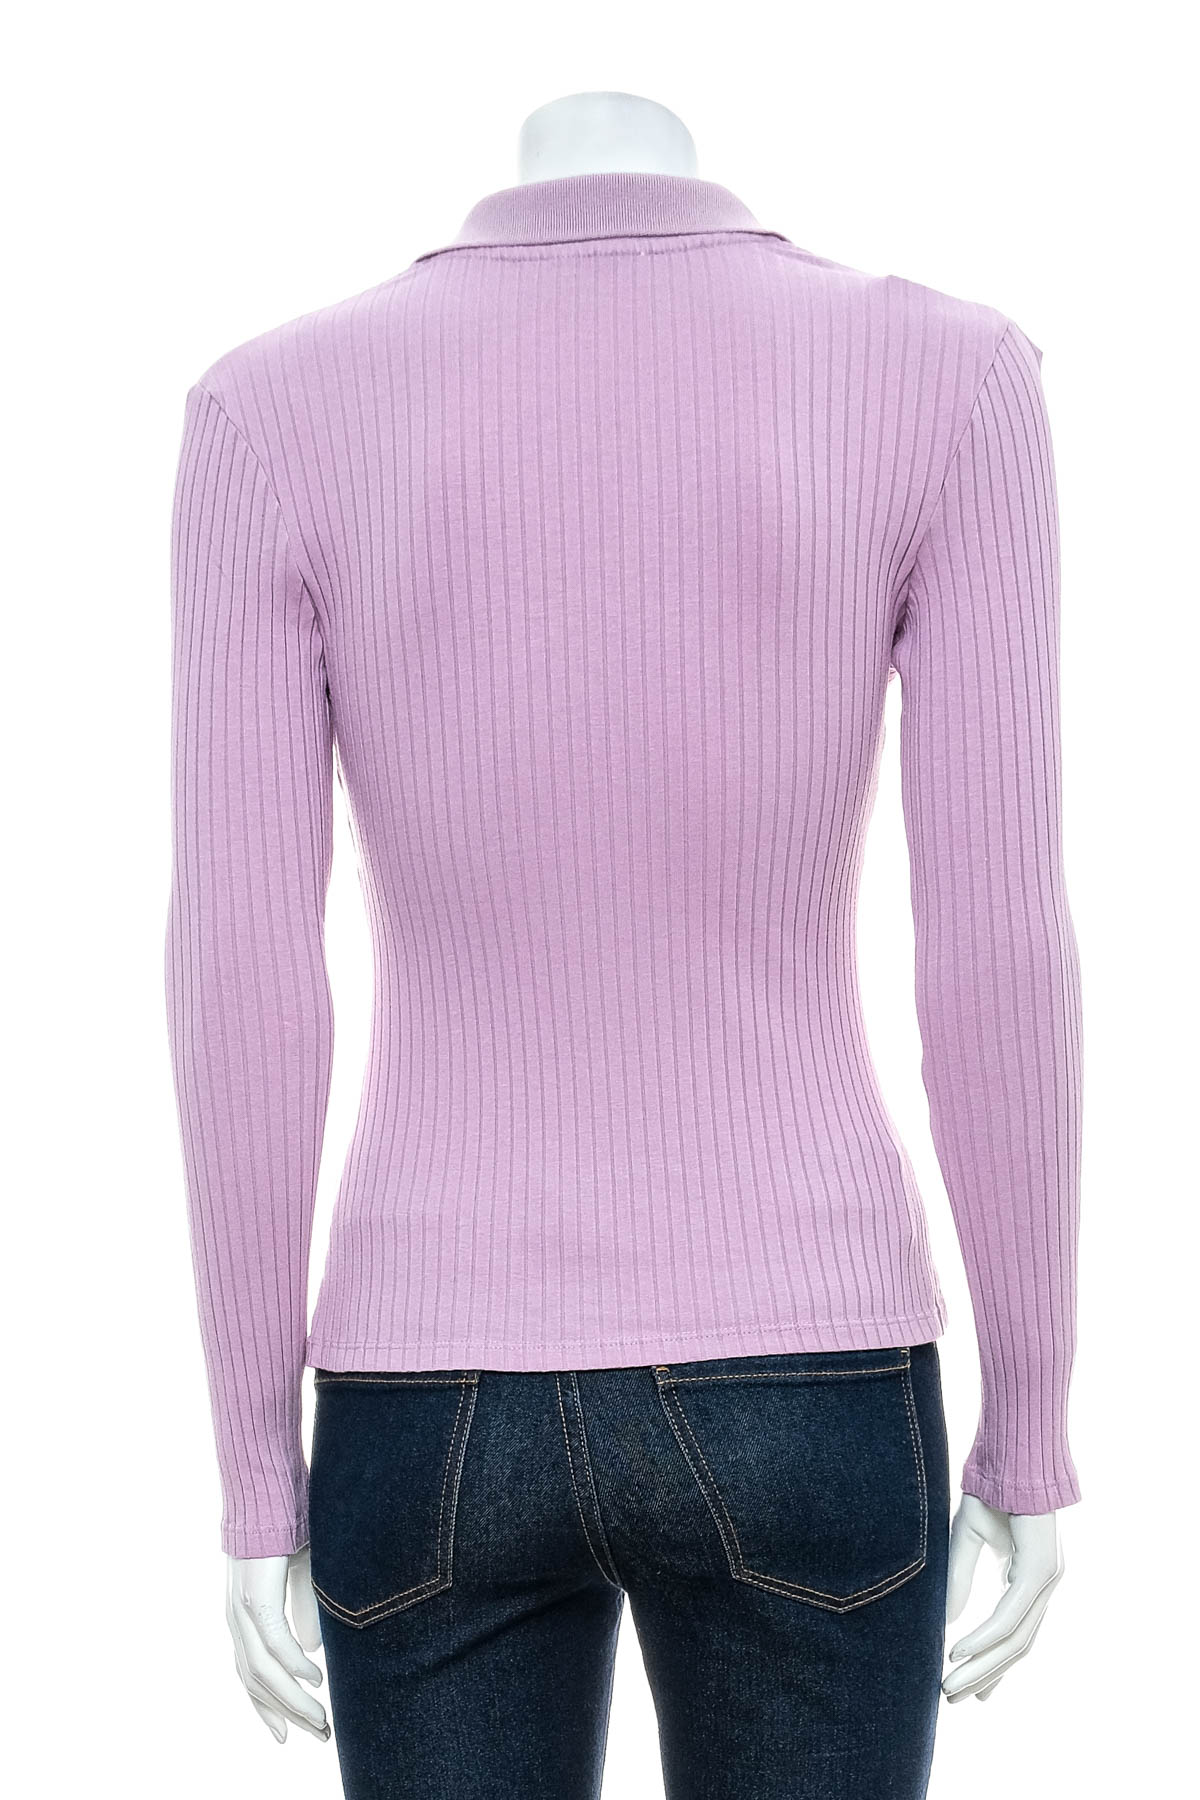 Women's blouse - Orsay - 1